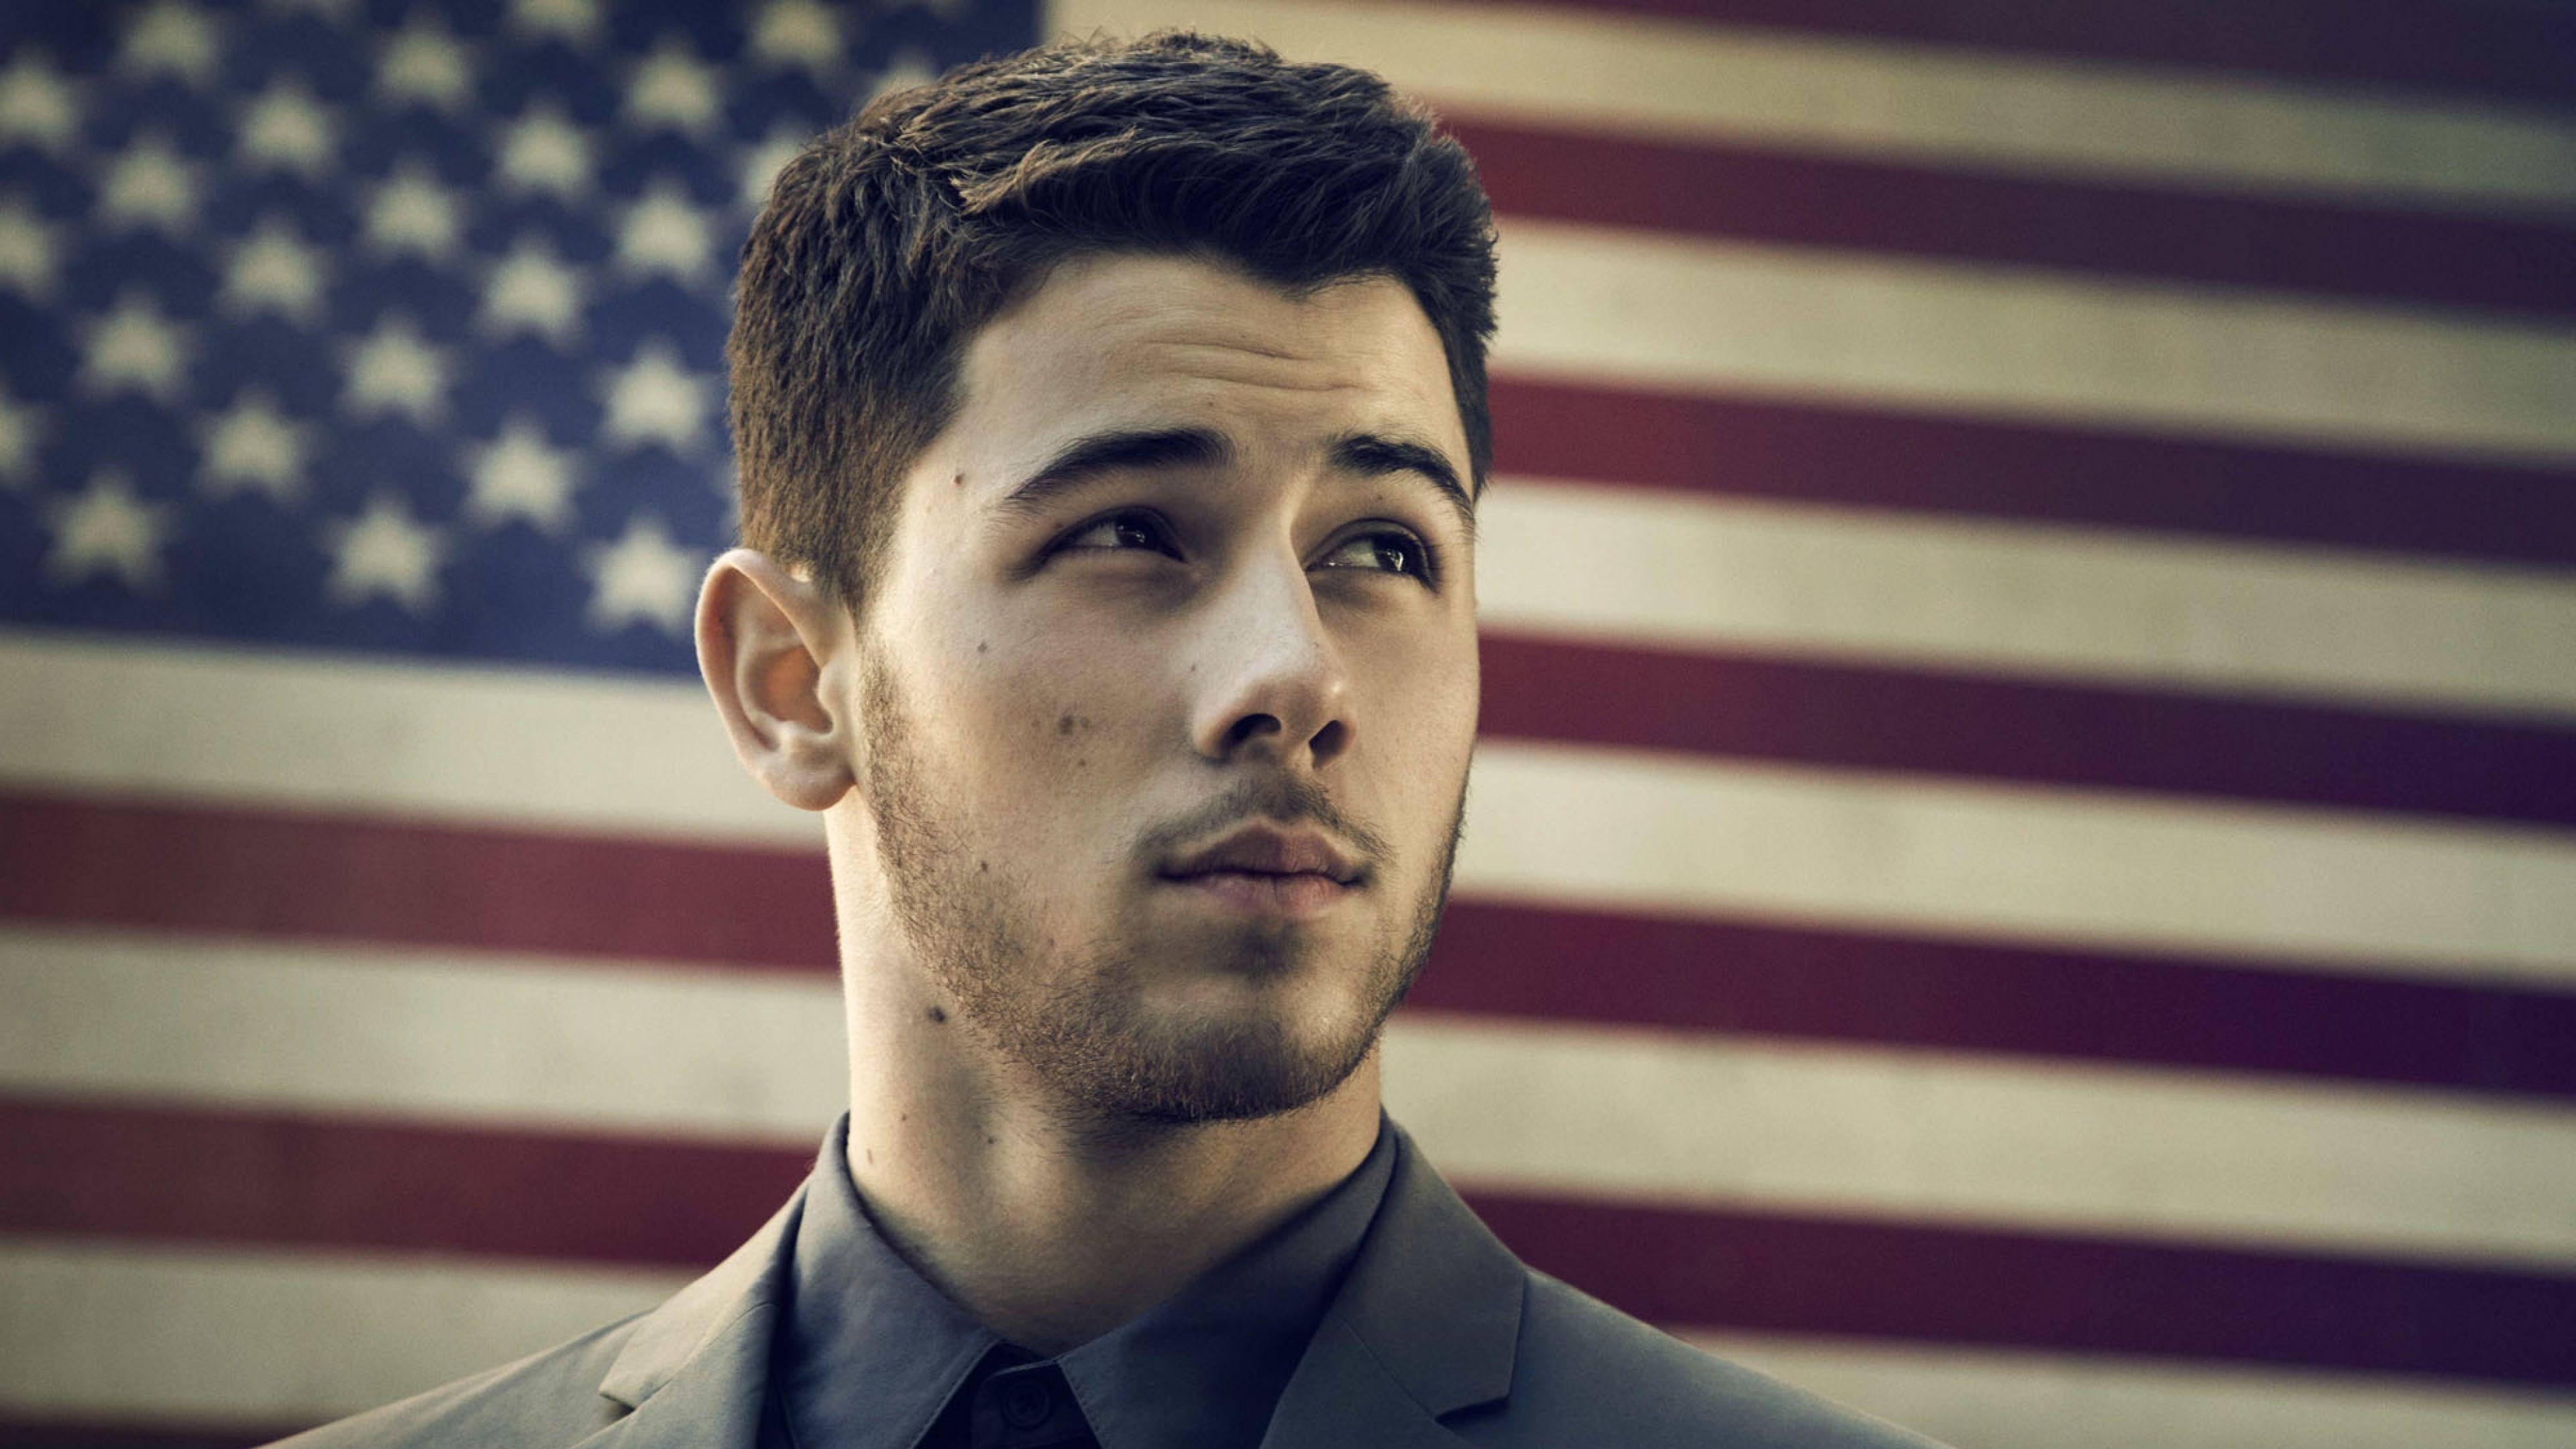 Nick Jonas Wallpaper and Background Image